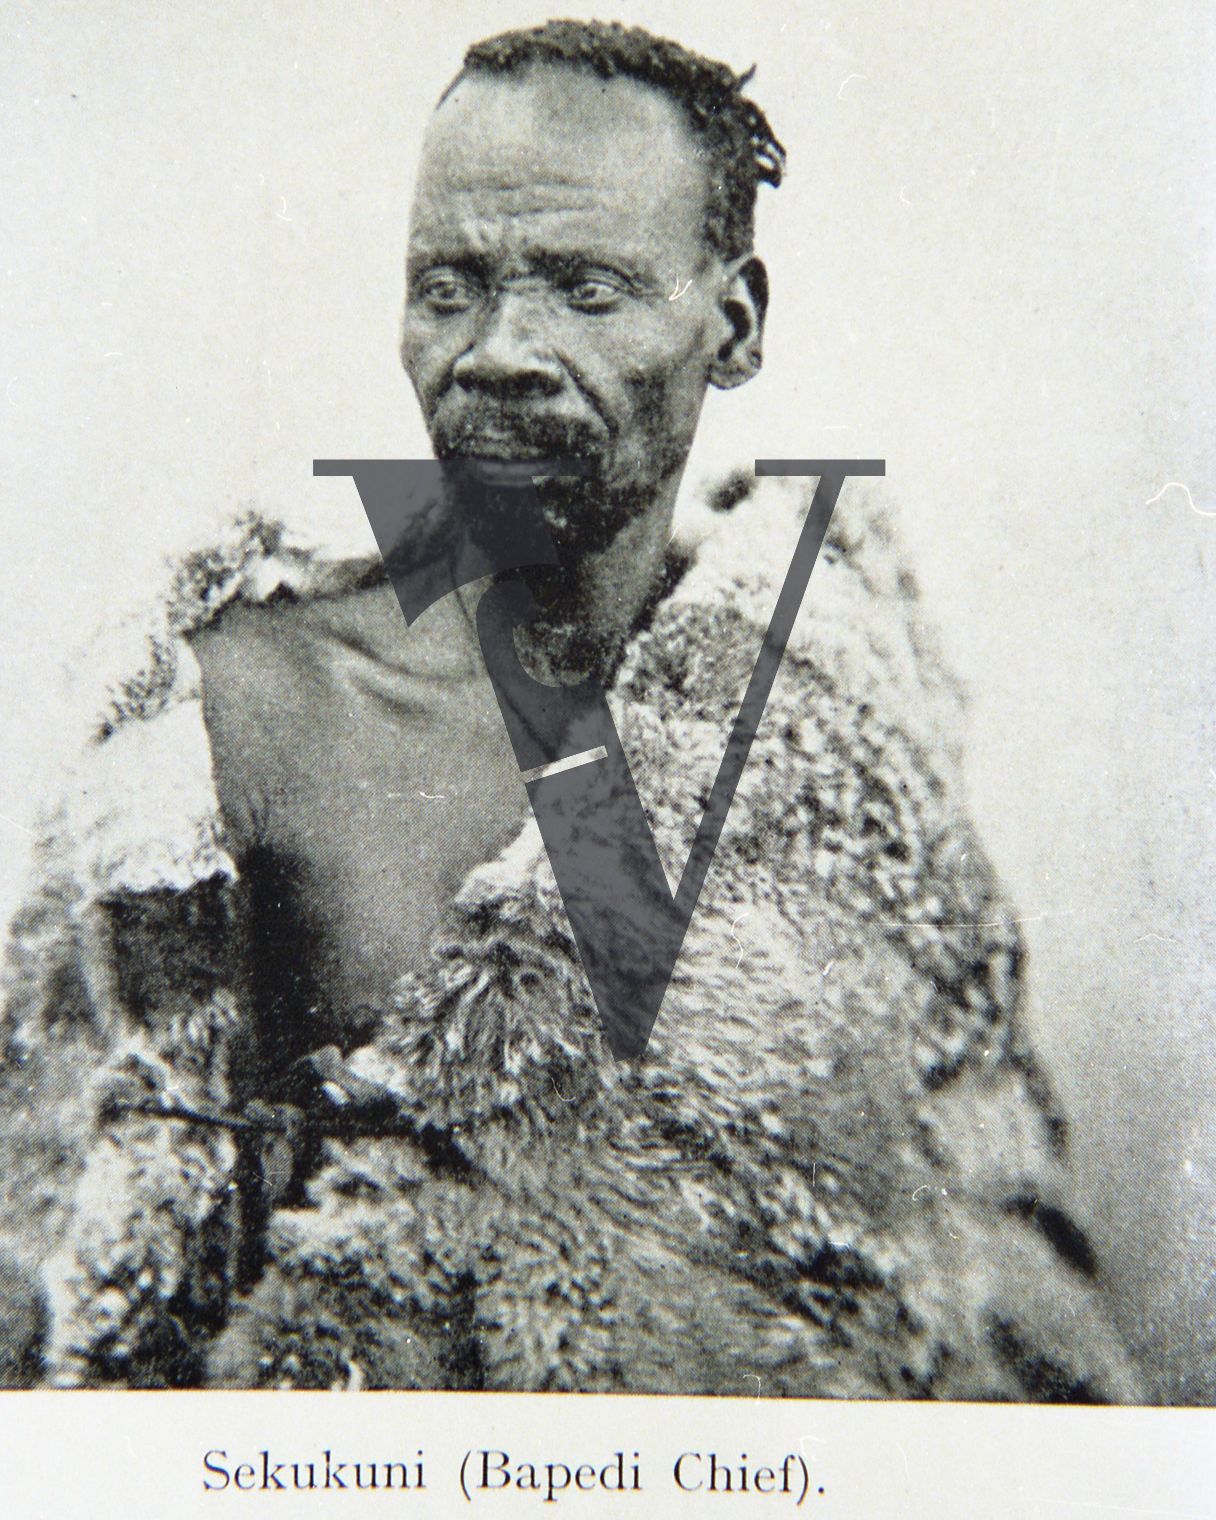 Rhodesia, historical image, Sekukuni, Bapedi chief, portrait.